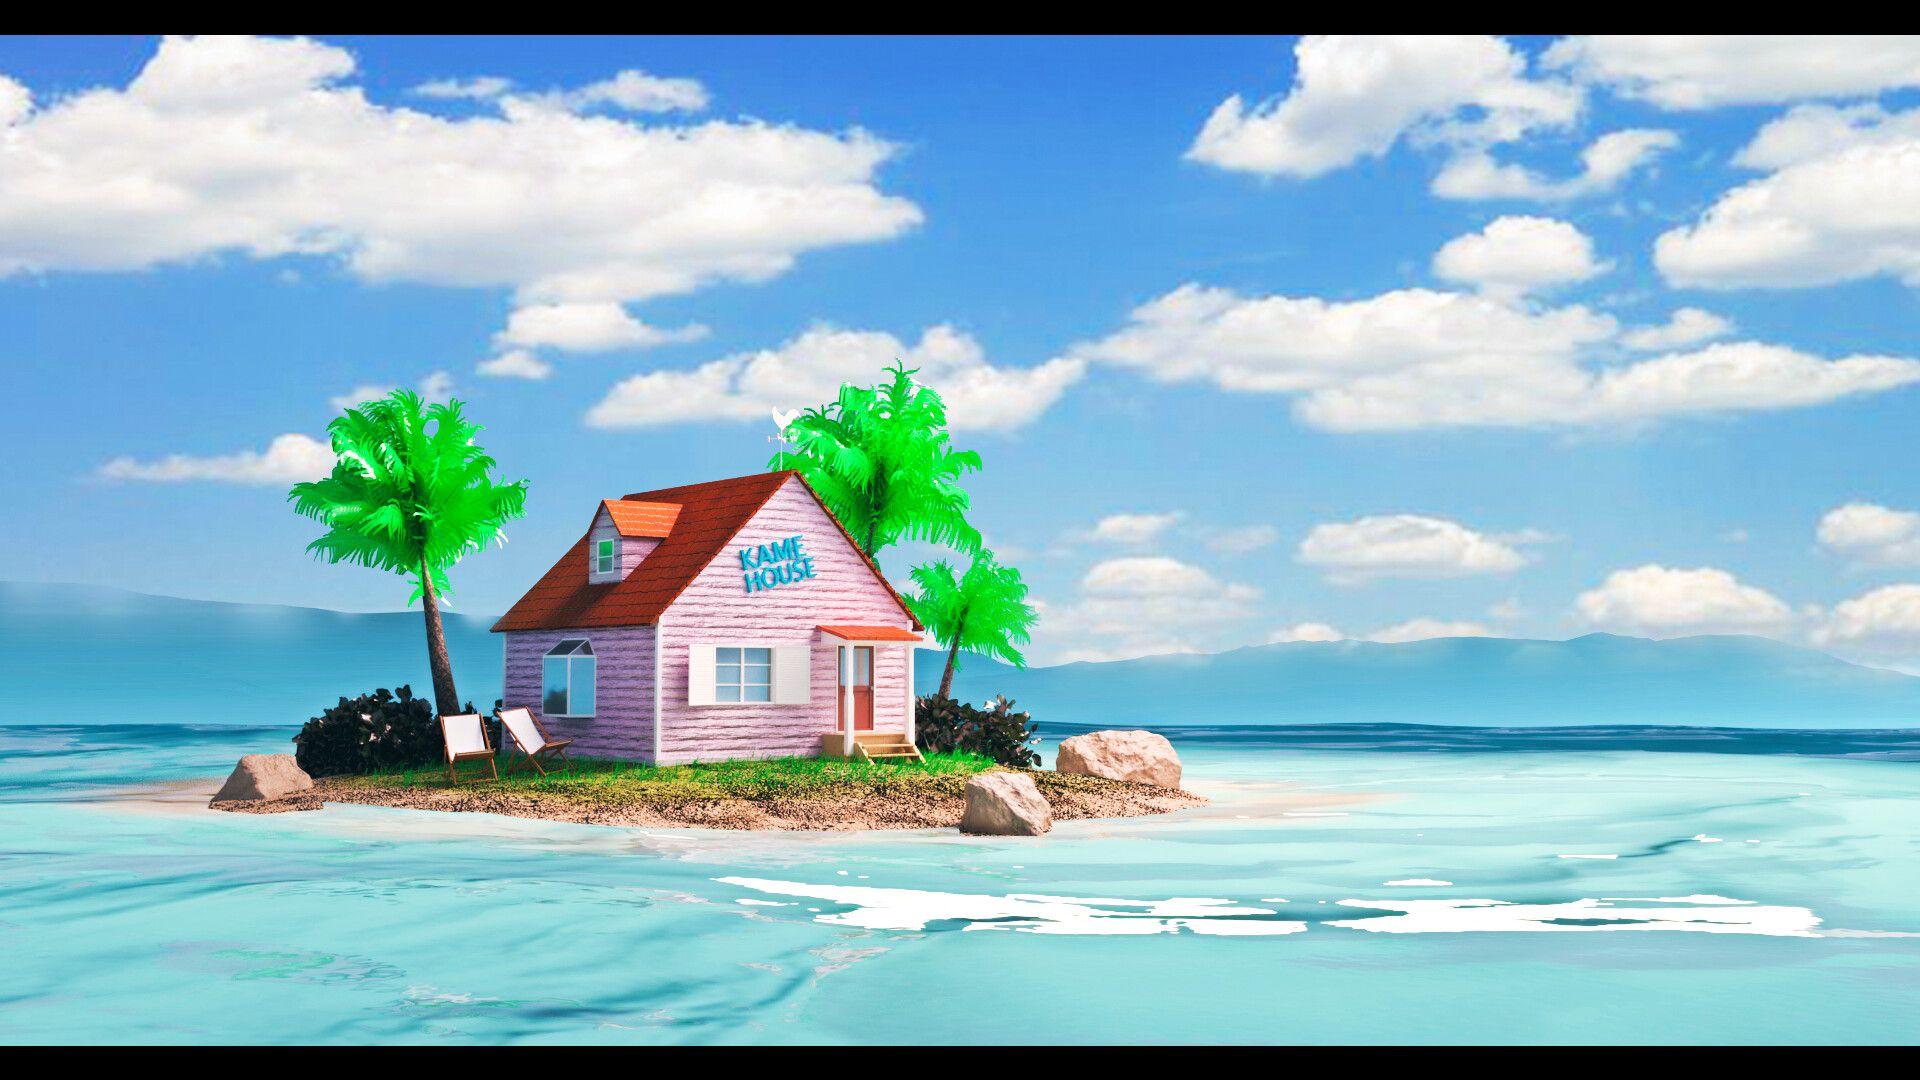 Kame House Island Dragon Ball 4K Wallpaper #6.2501